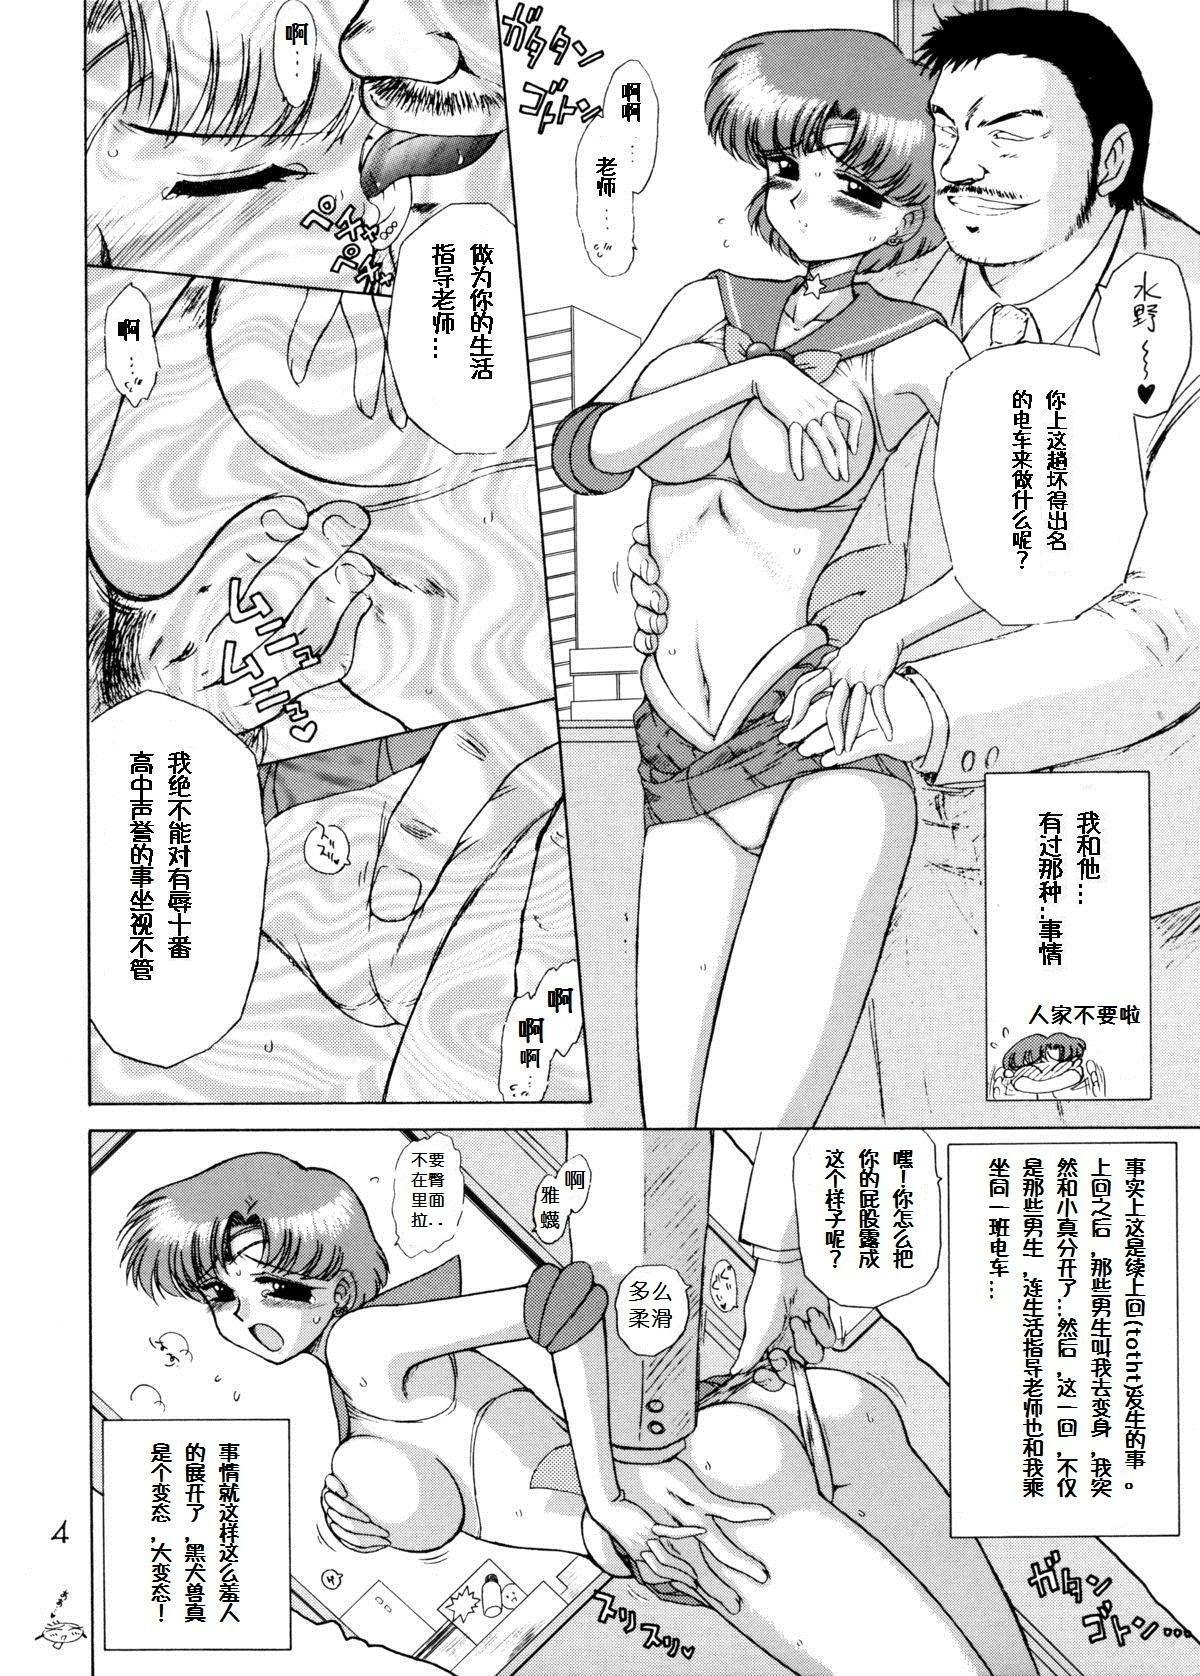 Nerd Anubis - Sailor moon Trimmed - Page 4